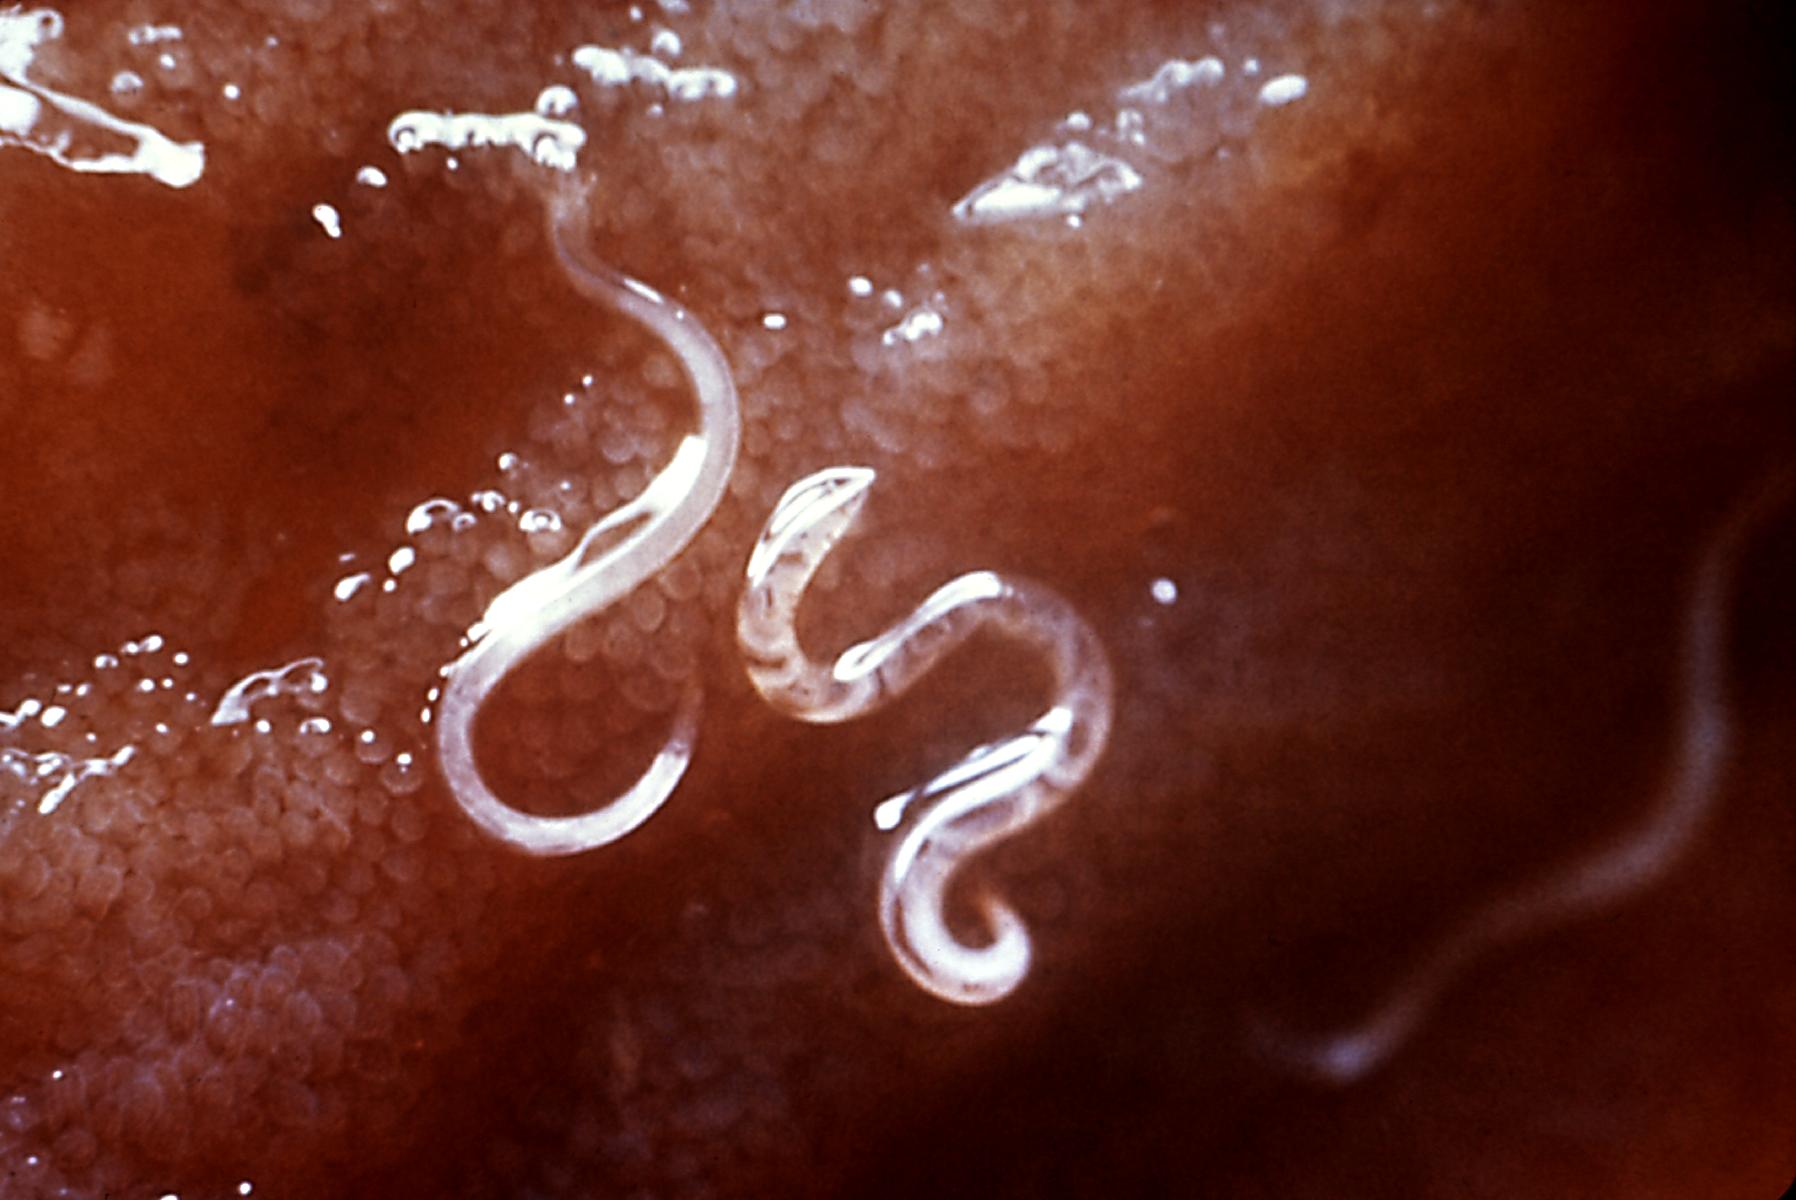 Hookworms. Credit: Wikimedia Commons